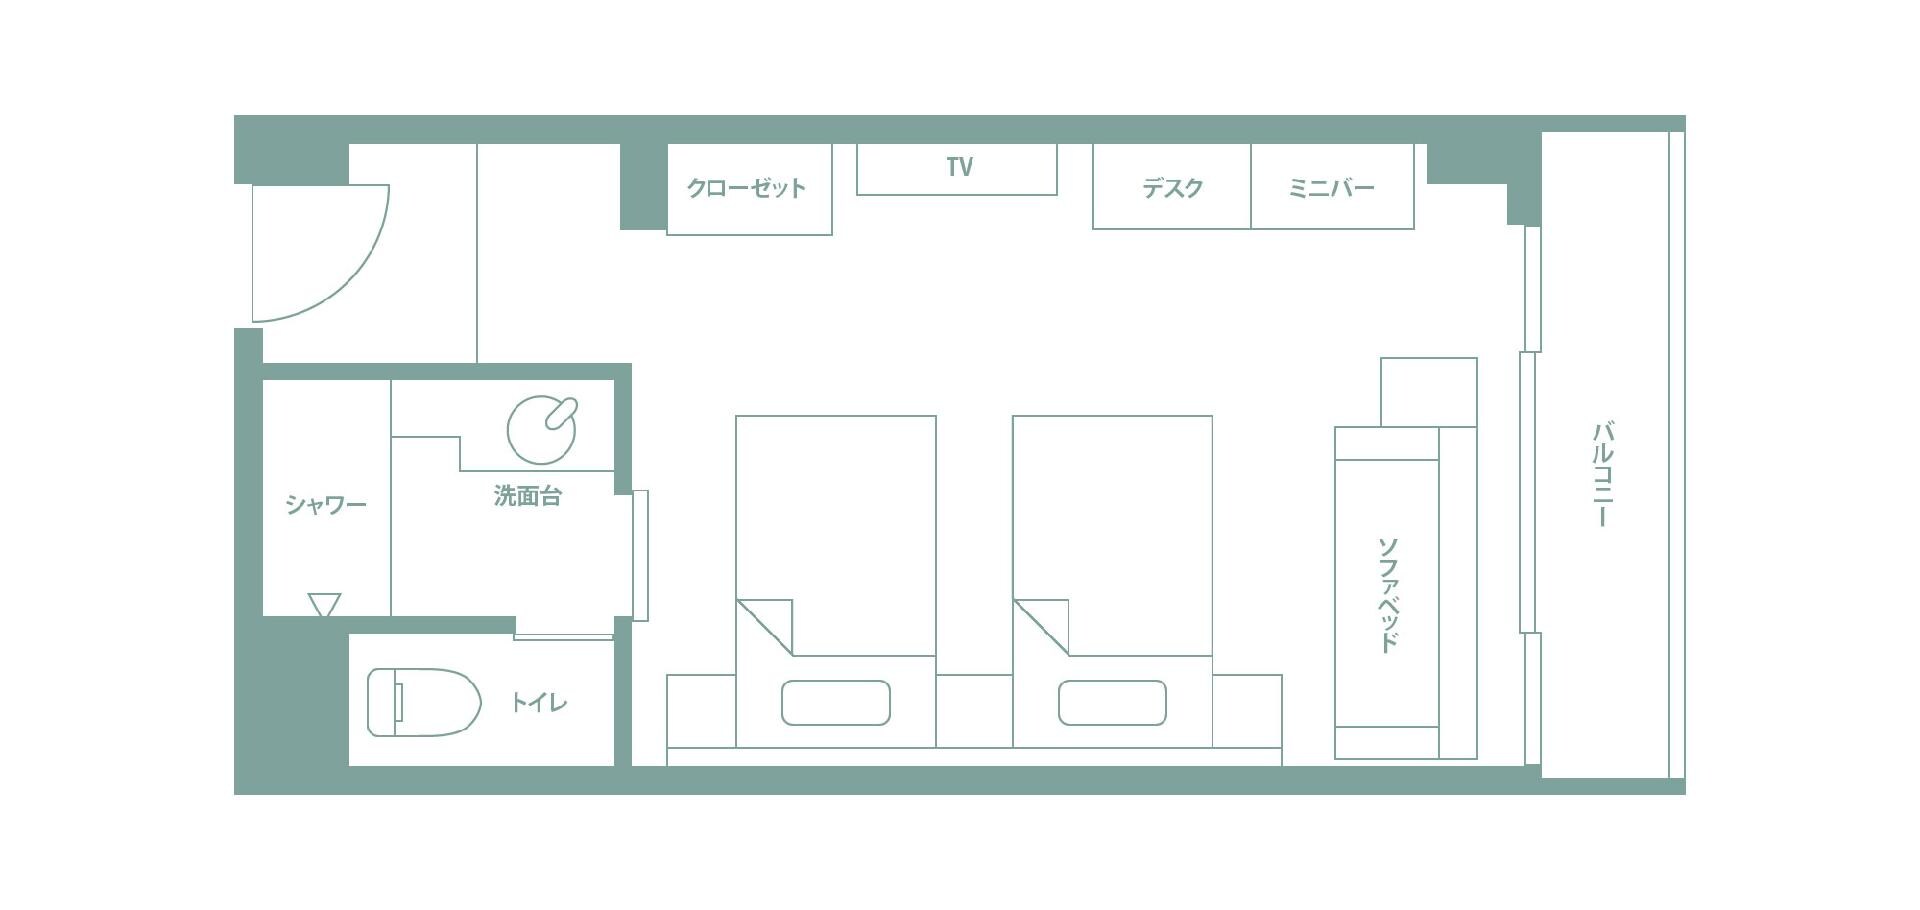 Stylish room floor plan